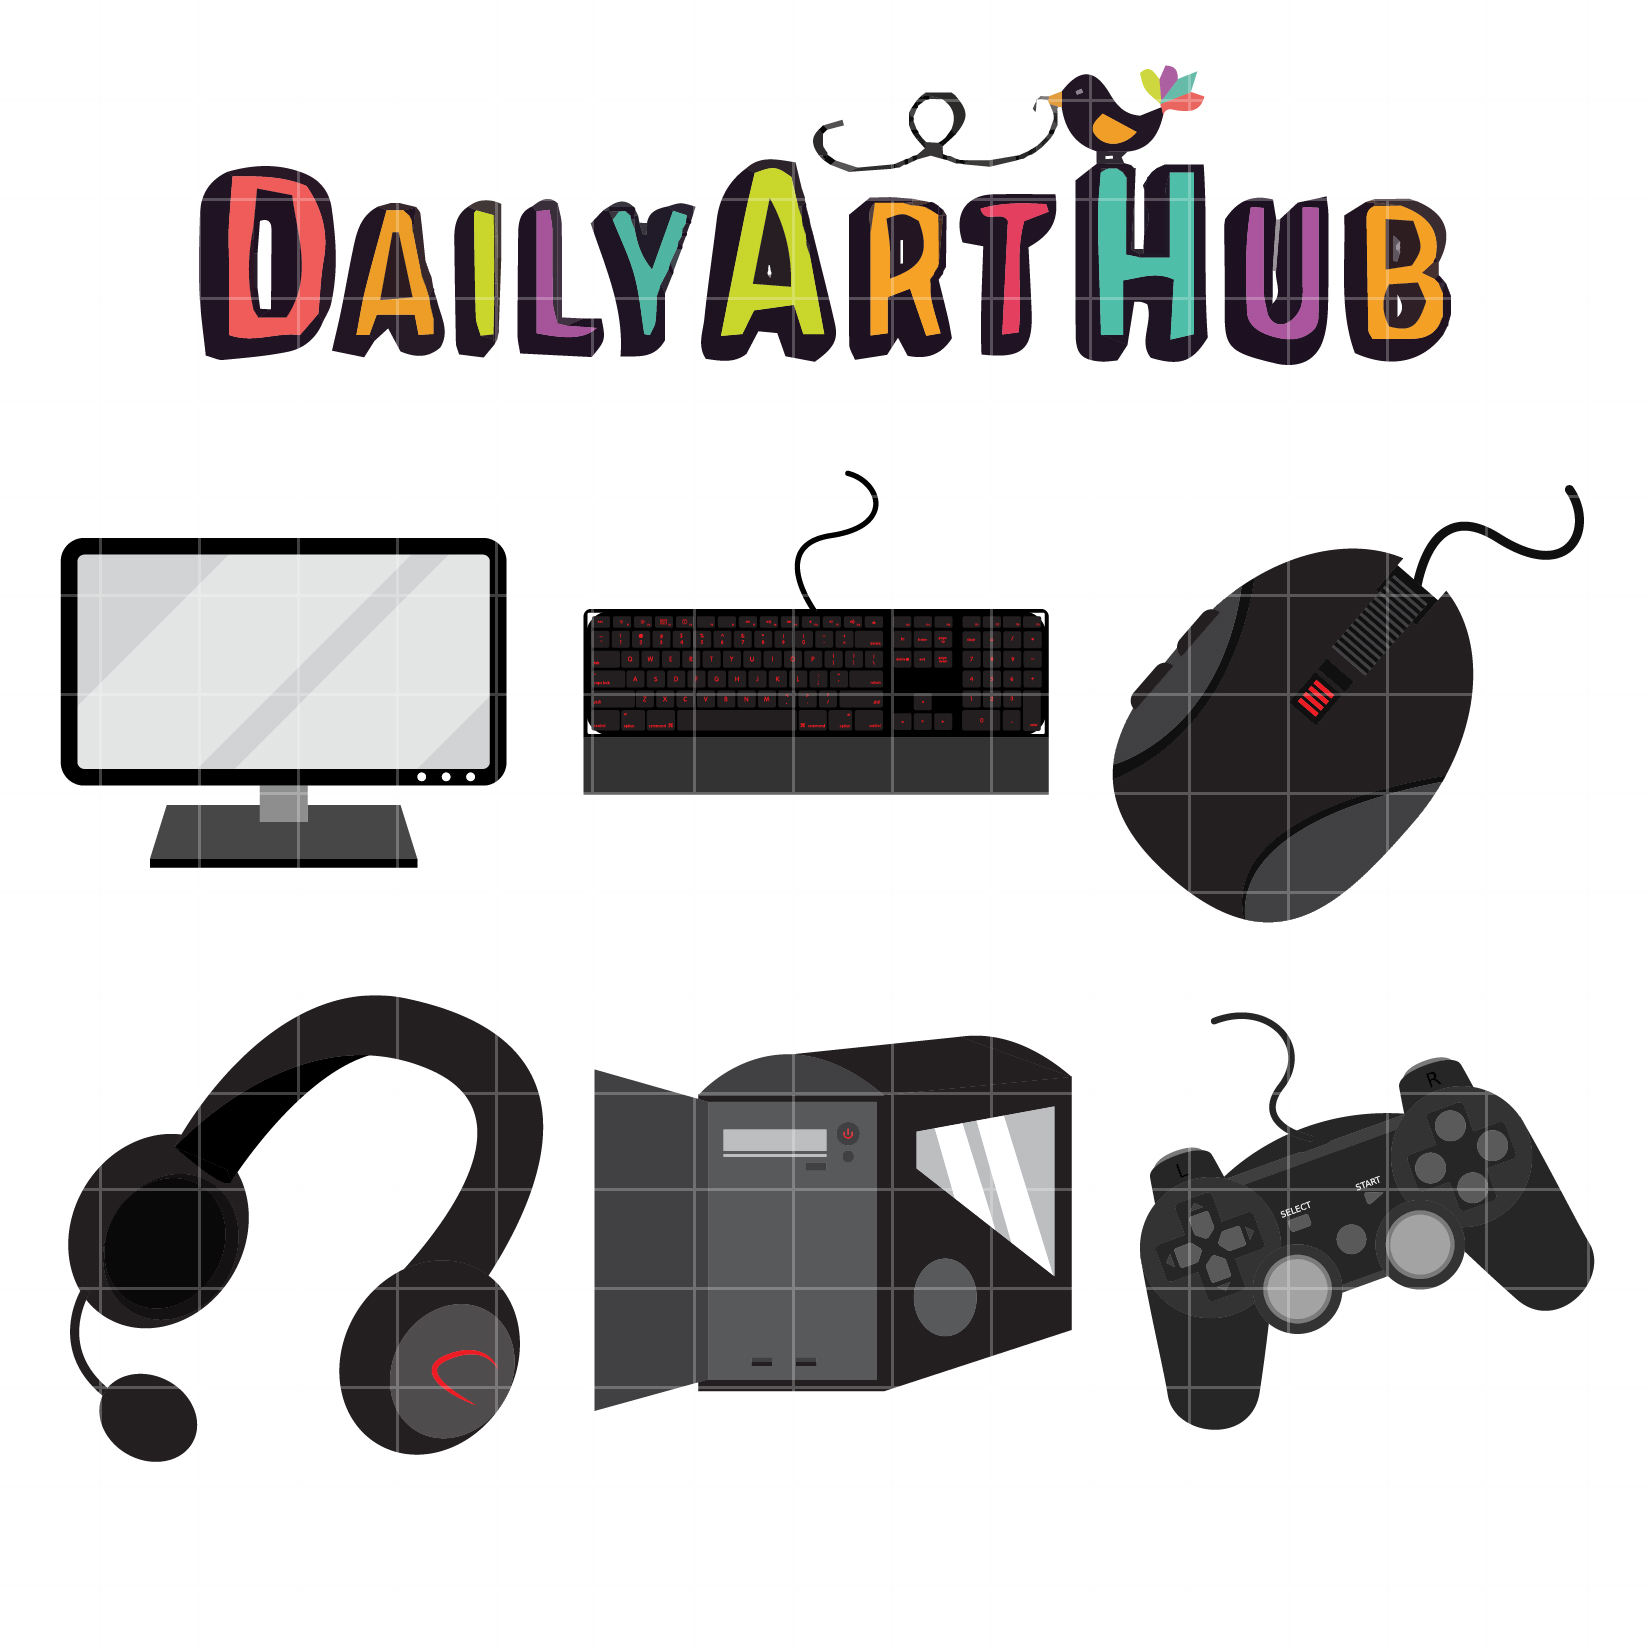 Pc Gamer Gears Clip Art Set Daily Art Hub Free Clip Art Everyday